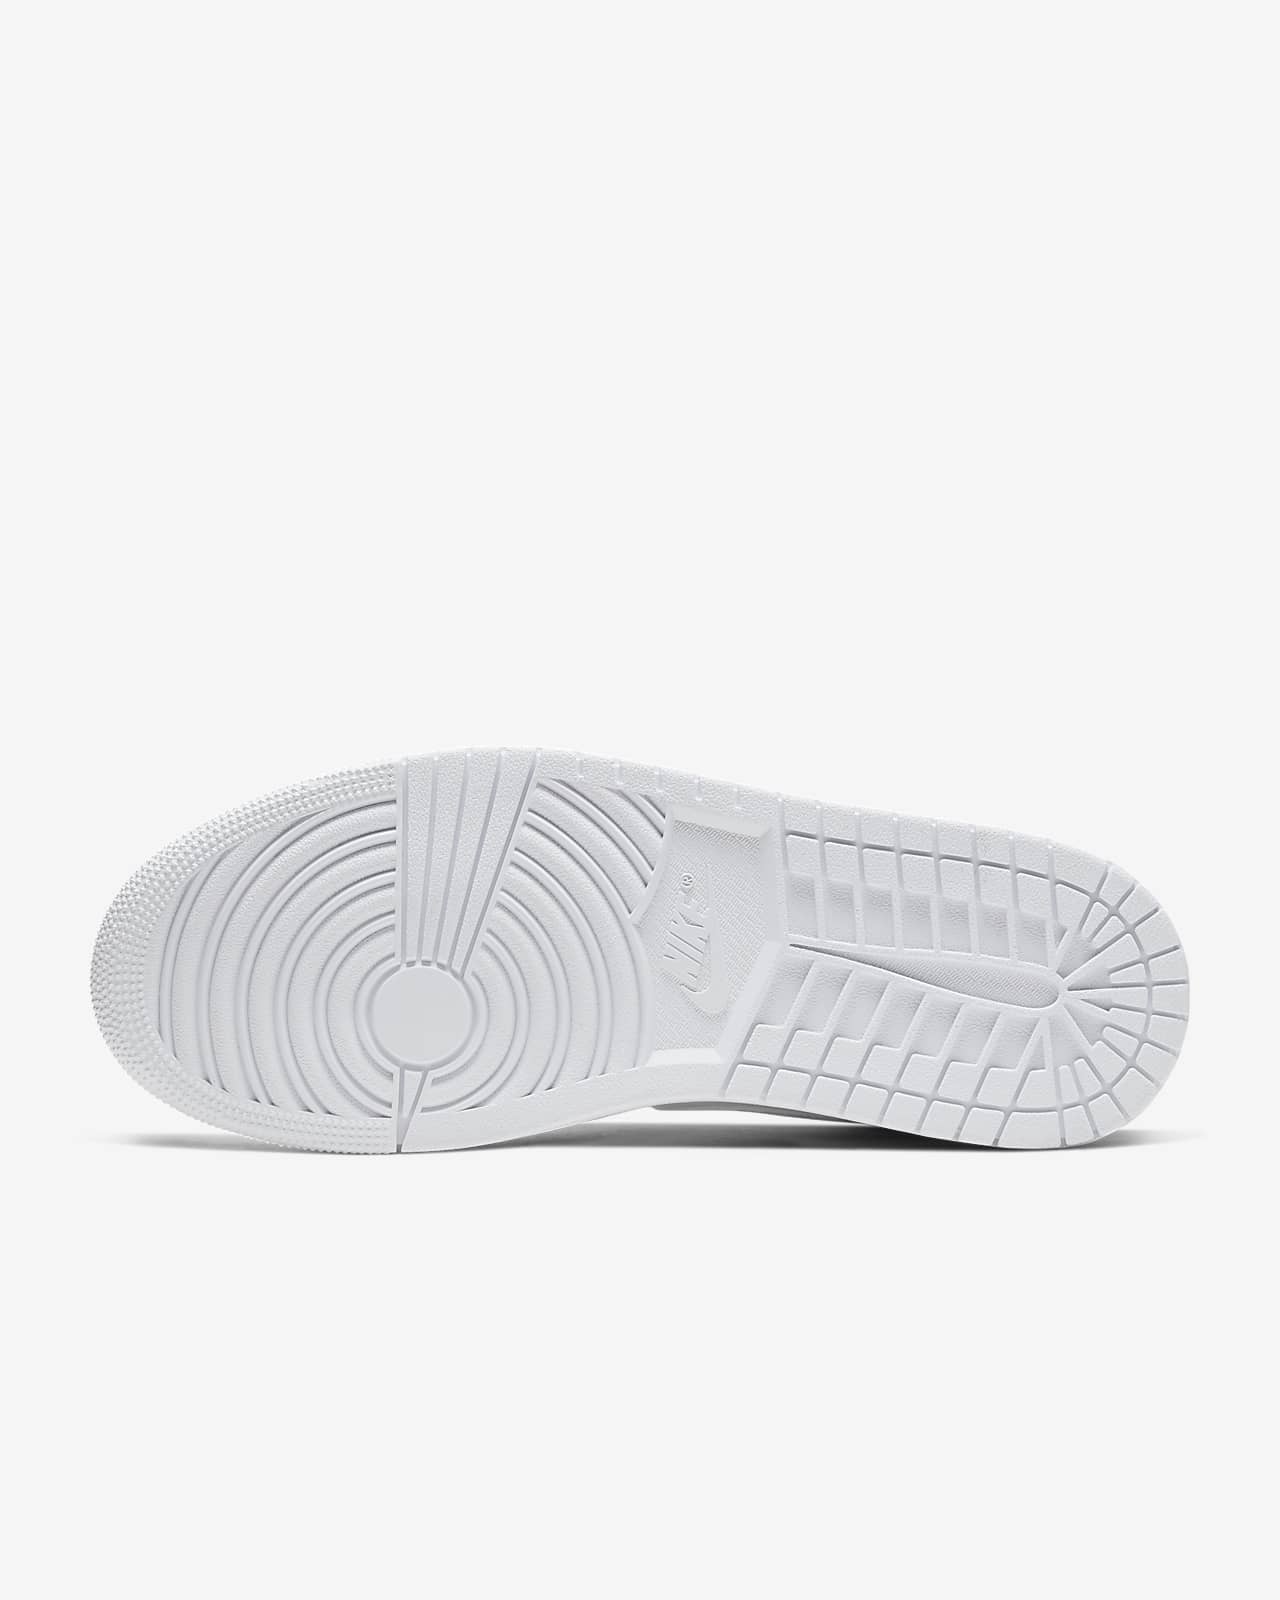 Air Jordan 1 Mid Shoe. Nike NL